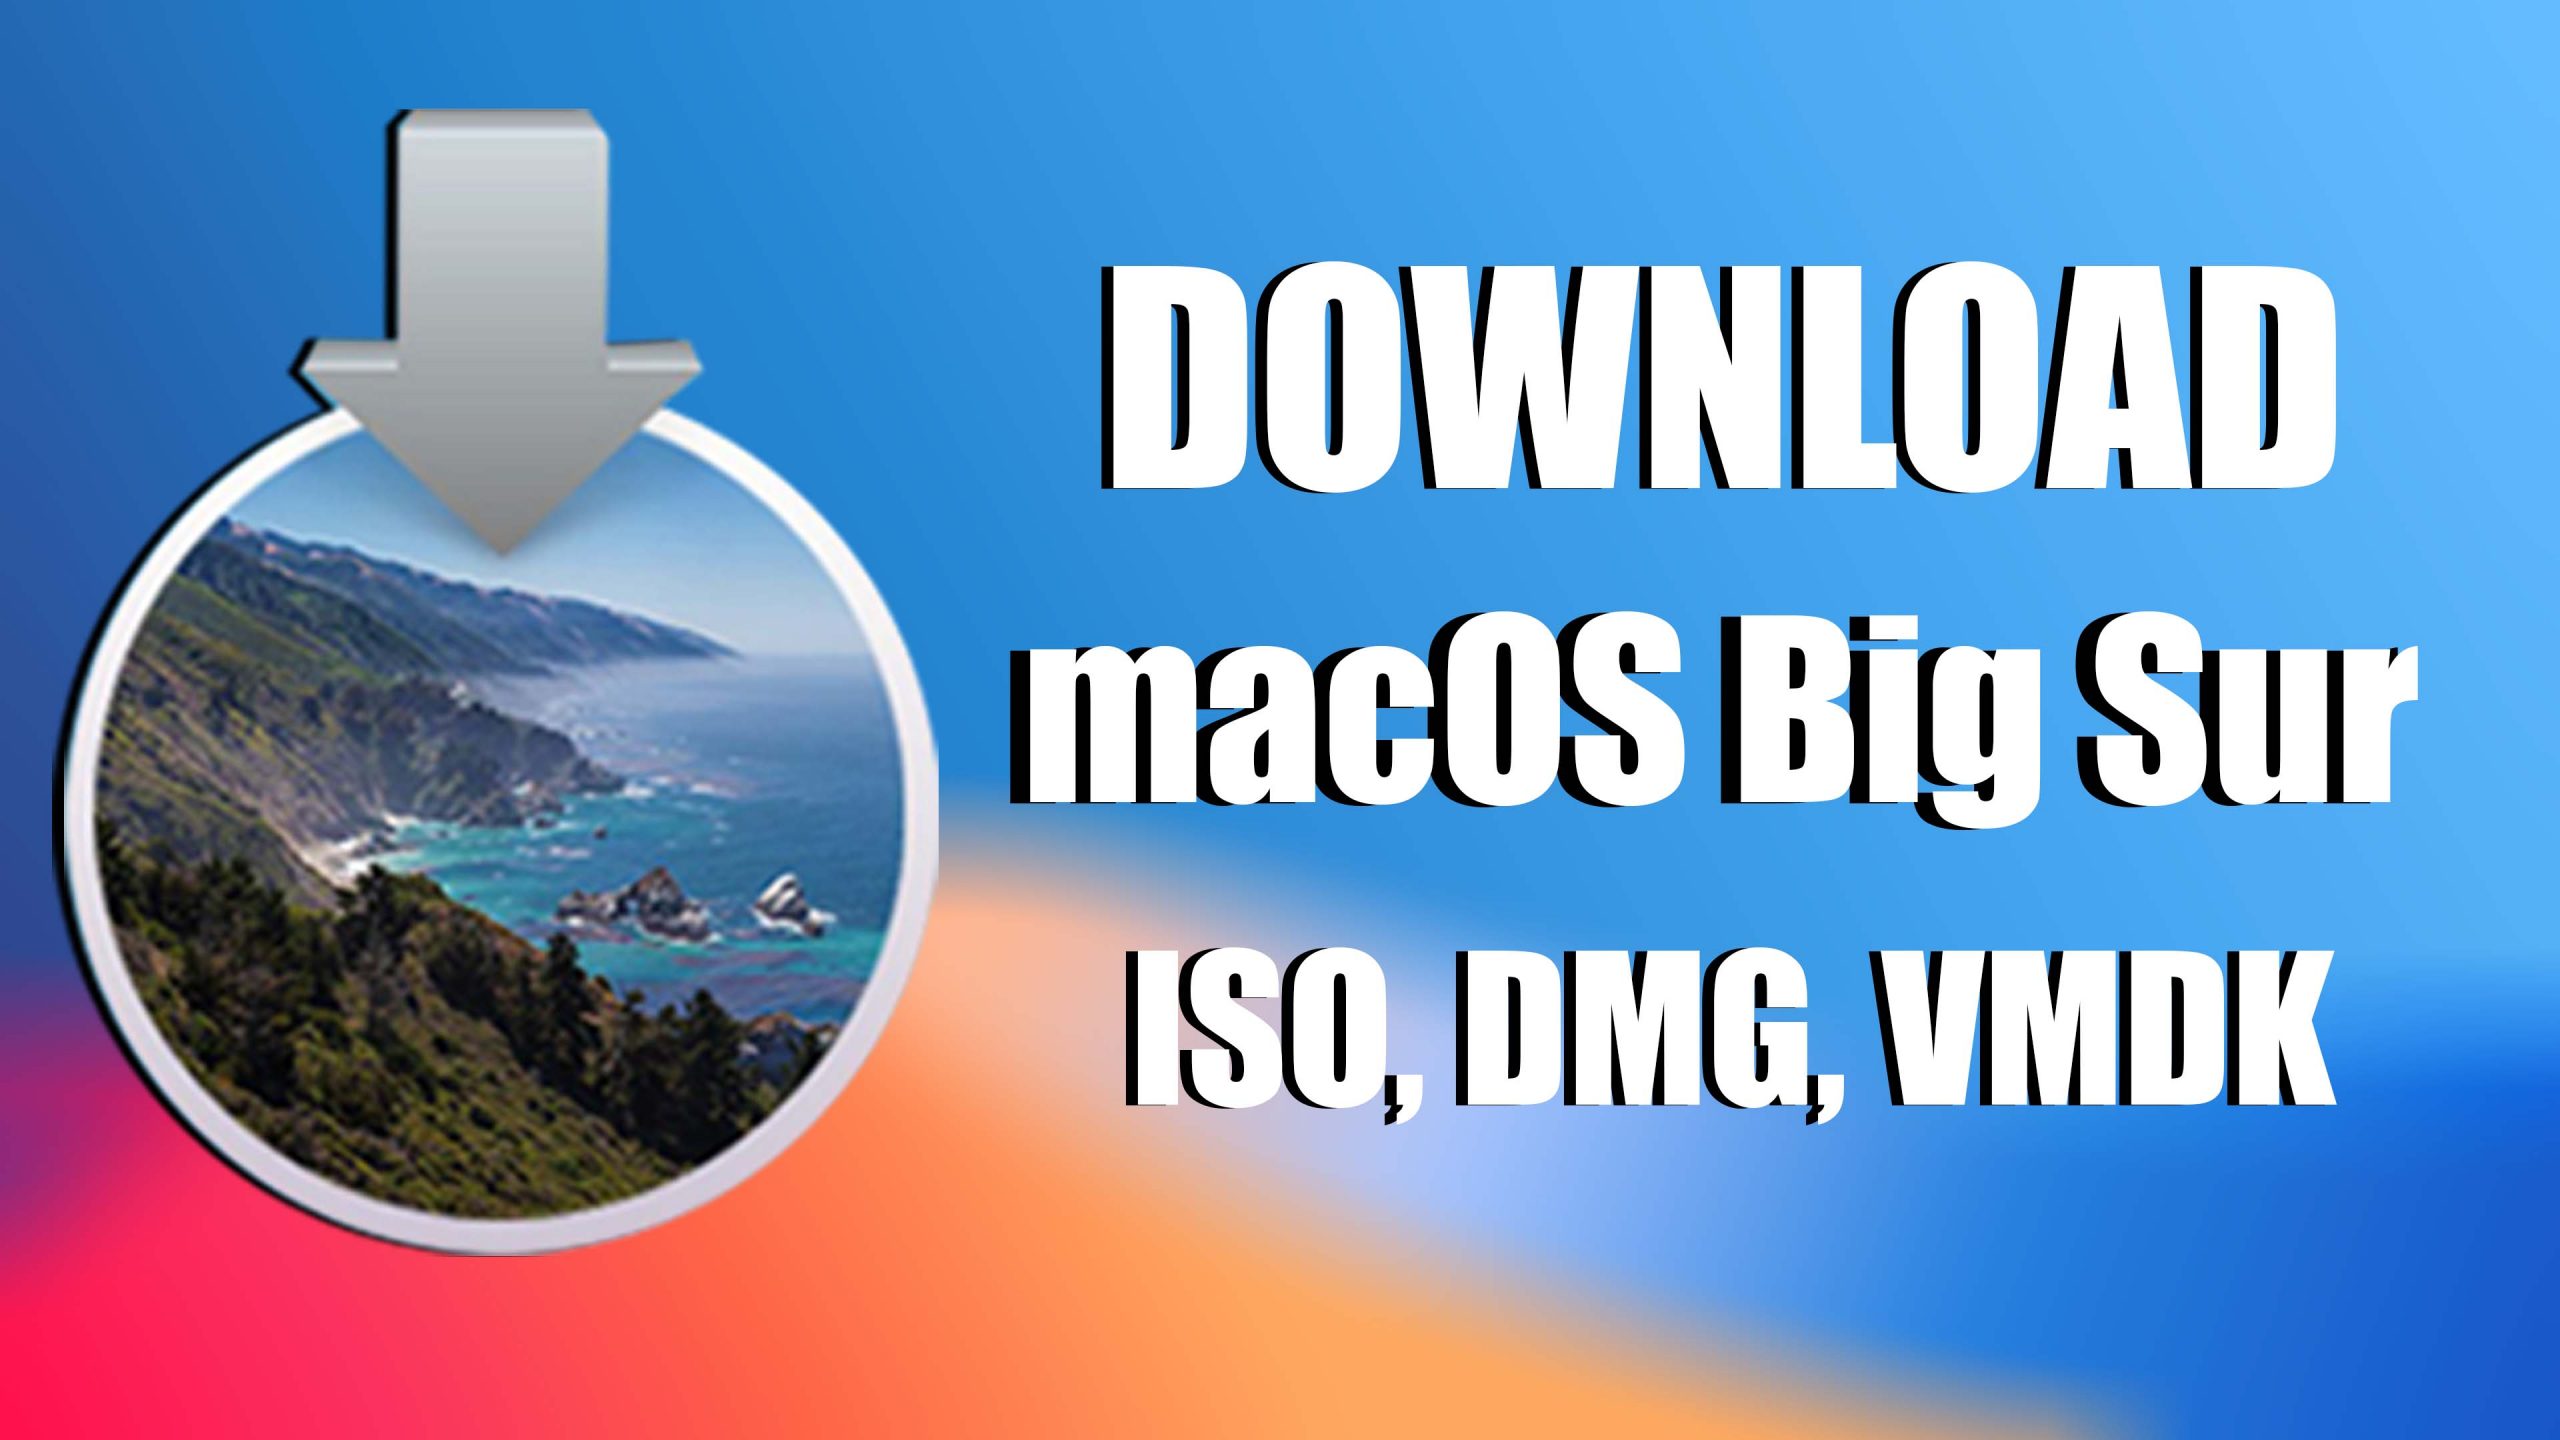 macos big sur latest version download